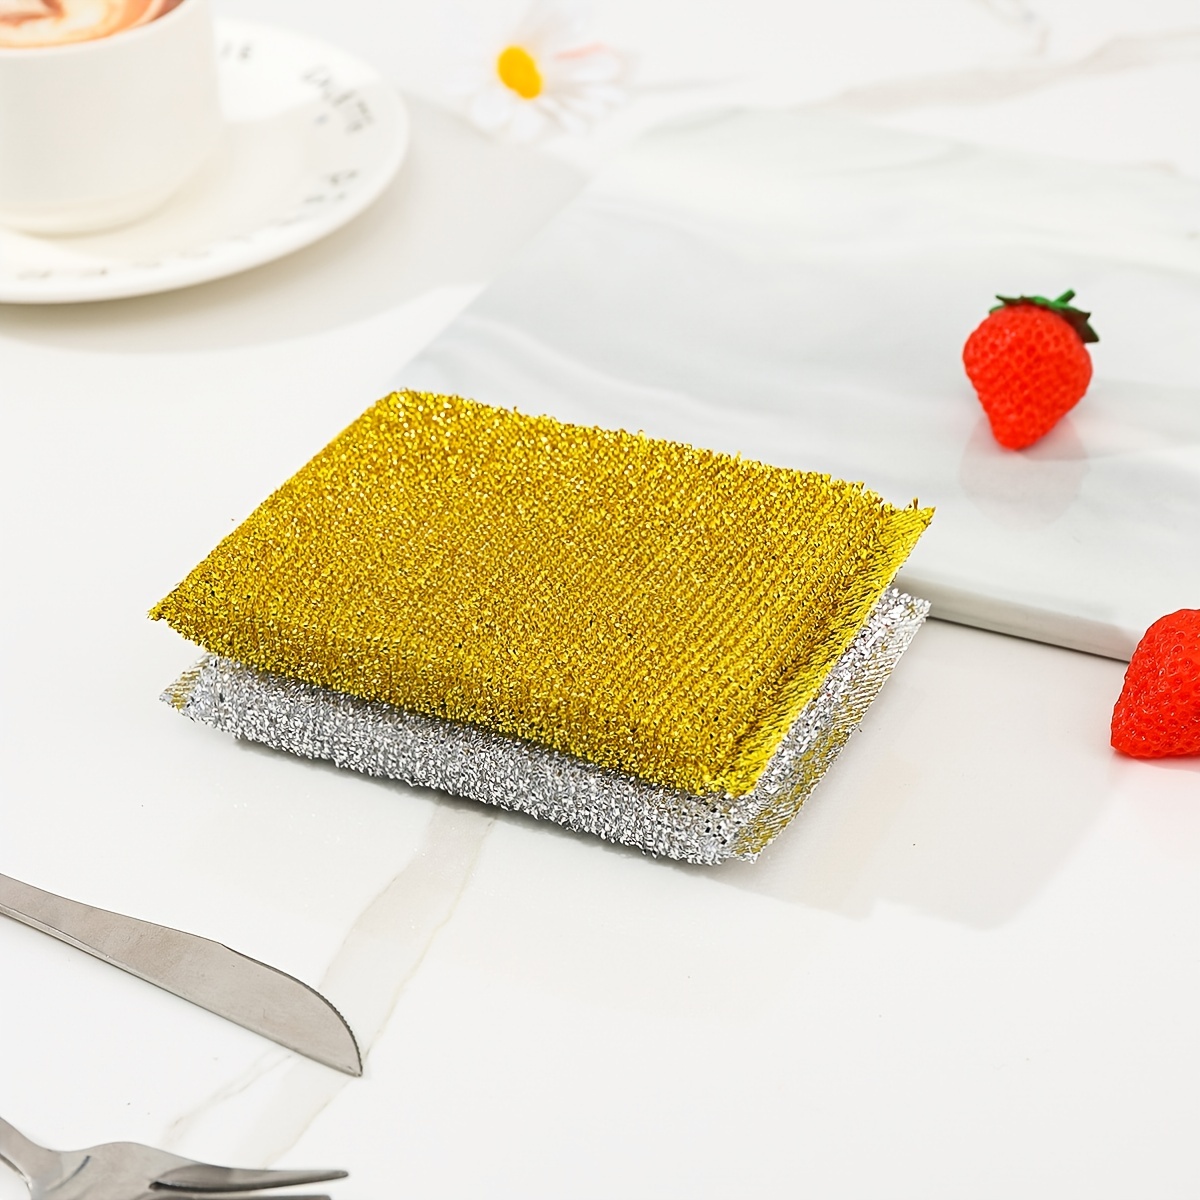 HOMERHYME Esponjas resistentes, paquete de 24 esponjas para fregar, esponja  multiusos para platos, esponja de cocina de celulosa ecológica, diseño